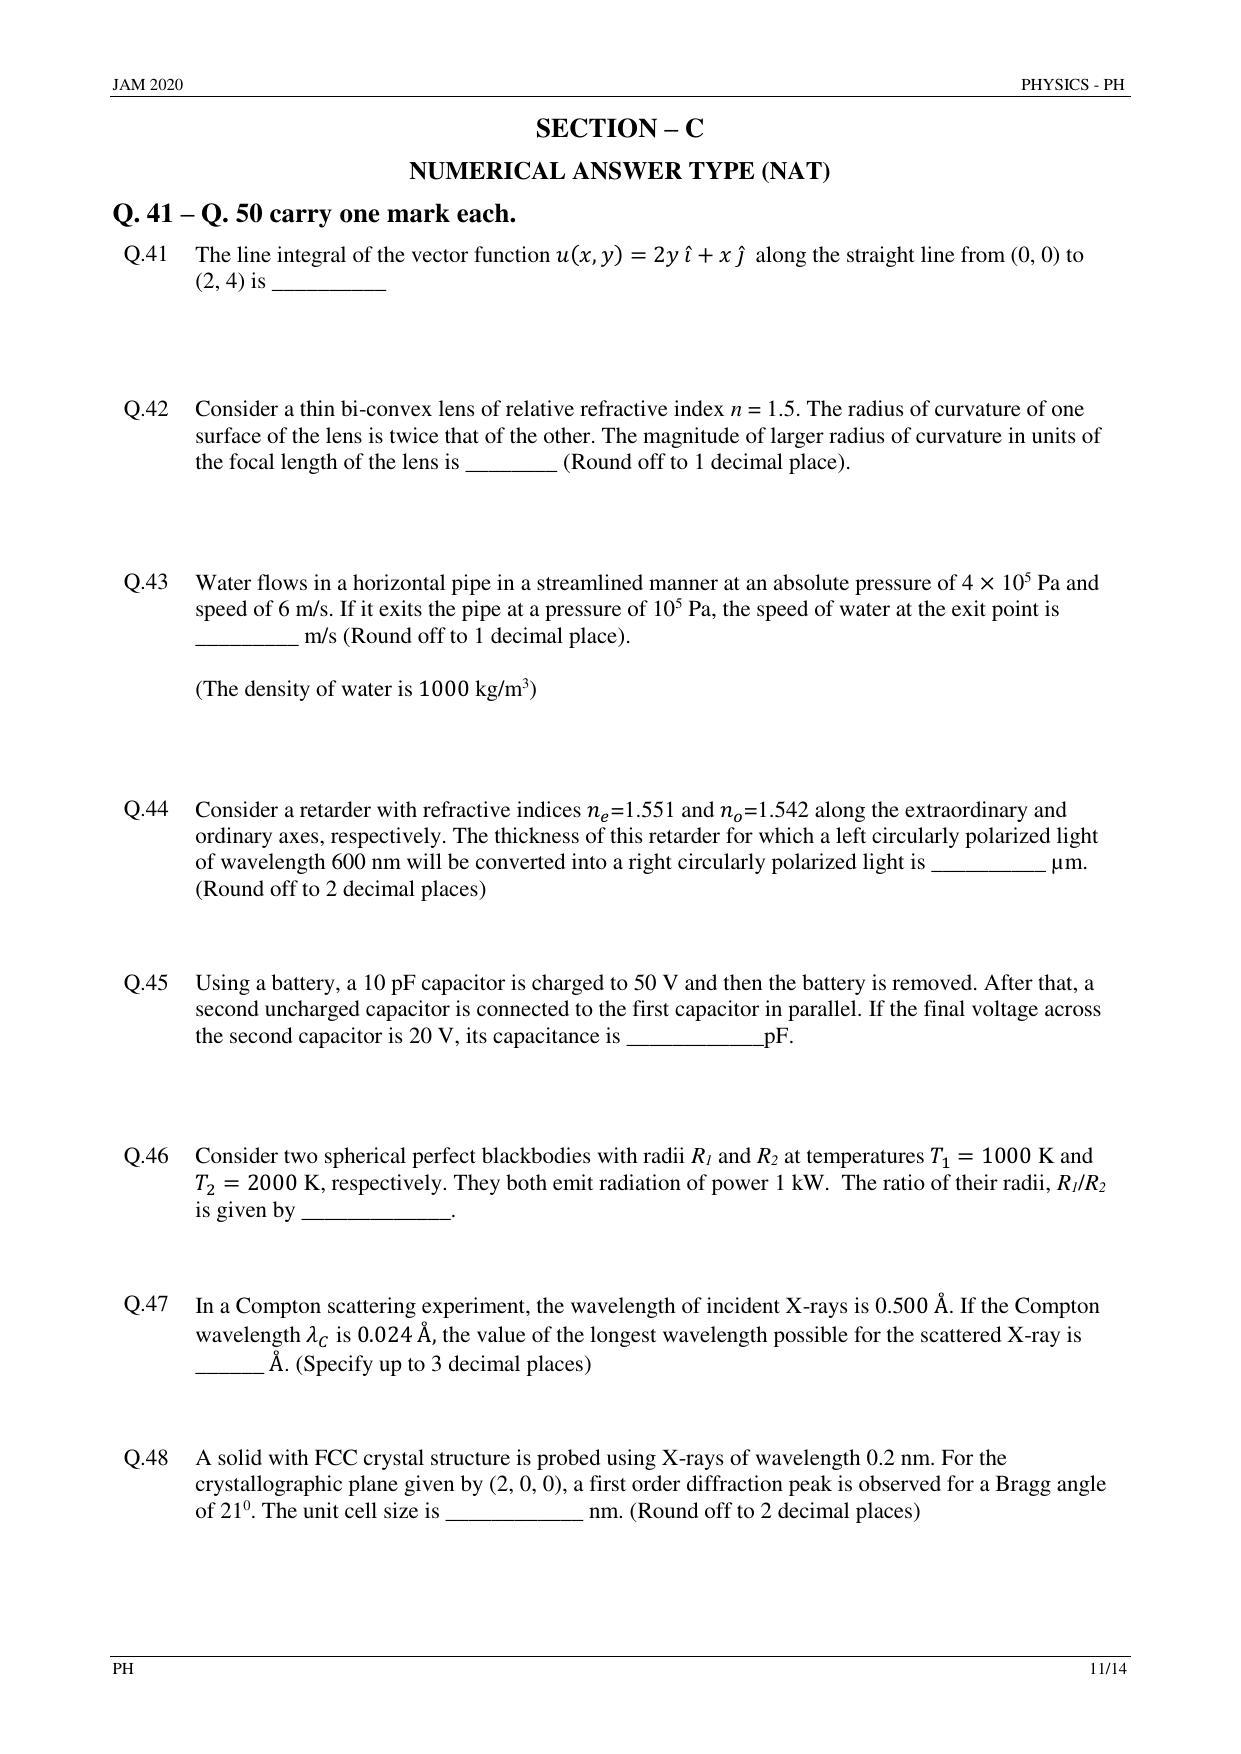 JAM 2020: PH Question Paper - Page 11